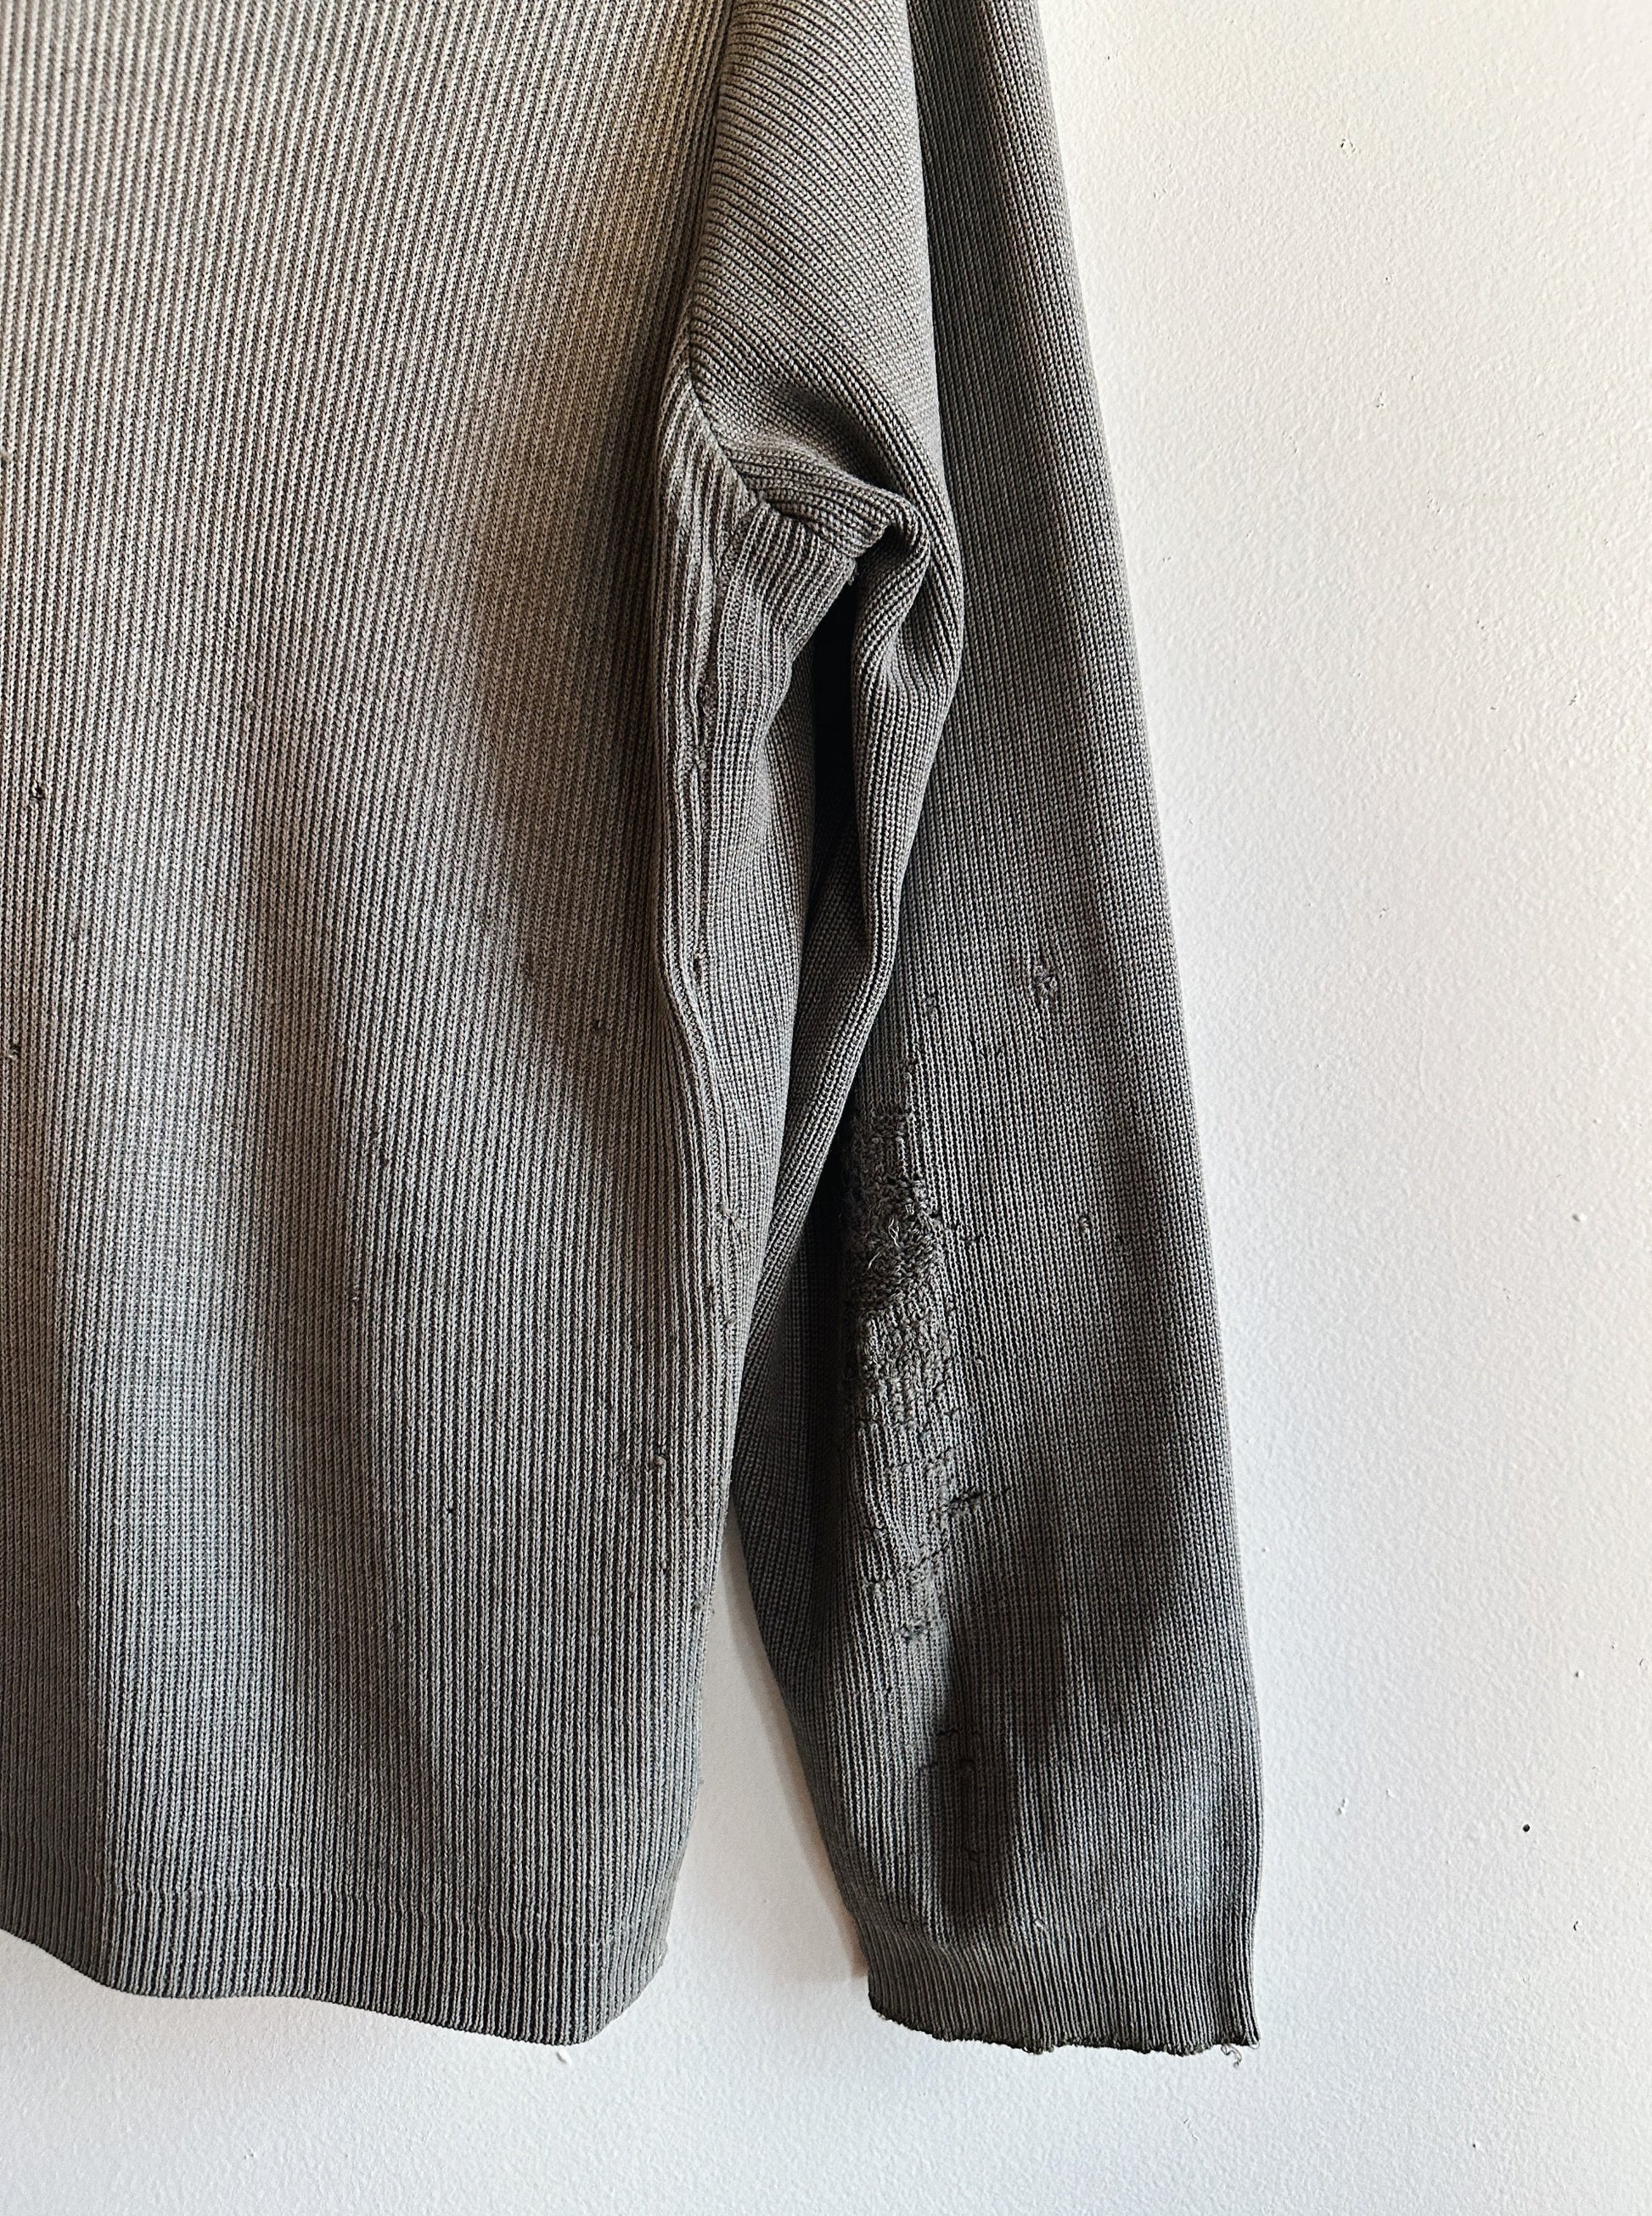 1930 German Knitwear Cardigan sleeve detail